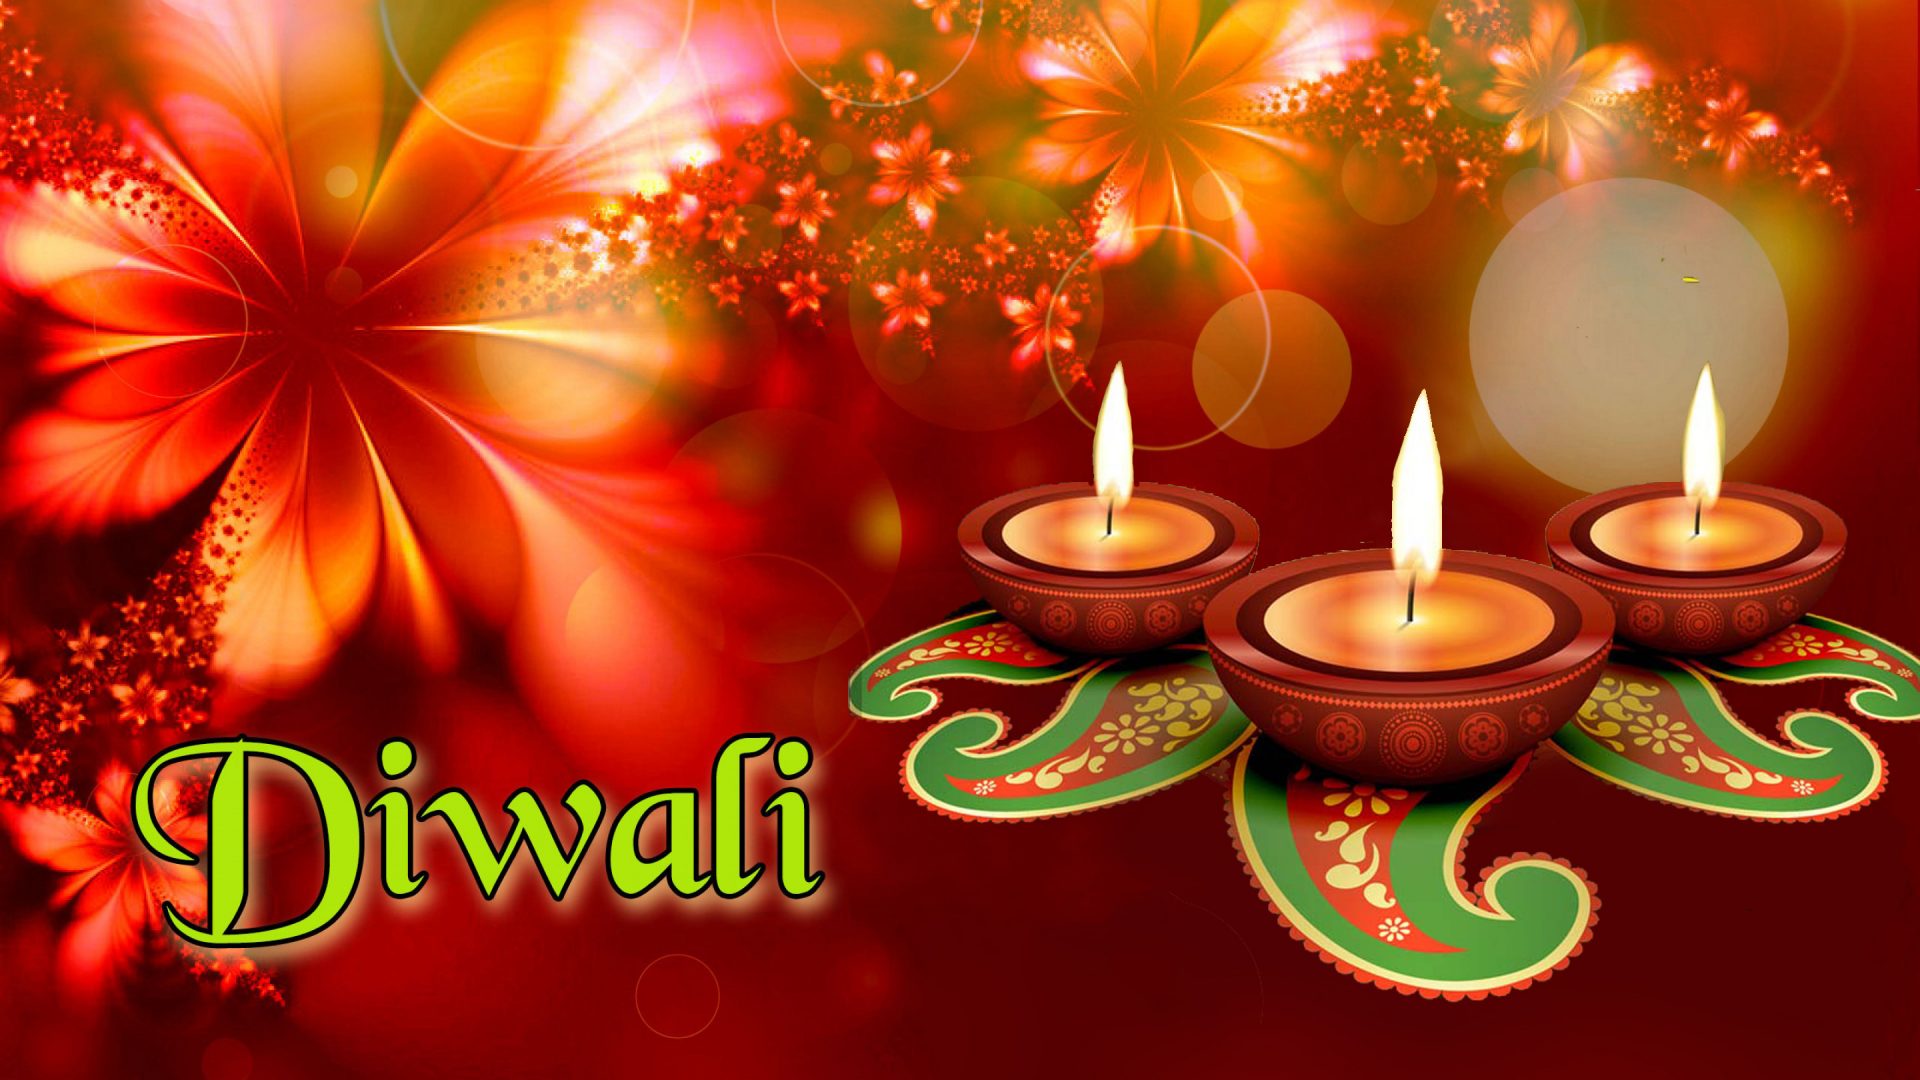 Diwali Images Download Hd - 1920x1080 Wallpaper 